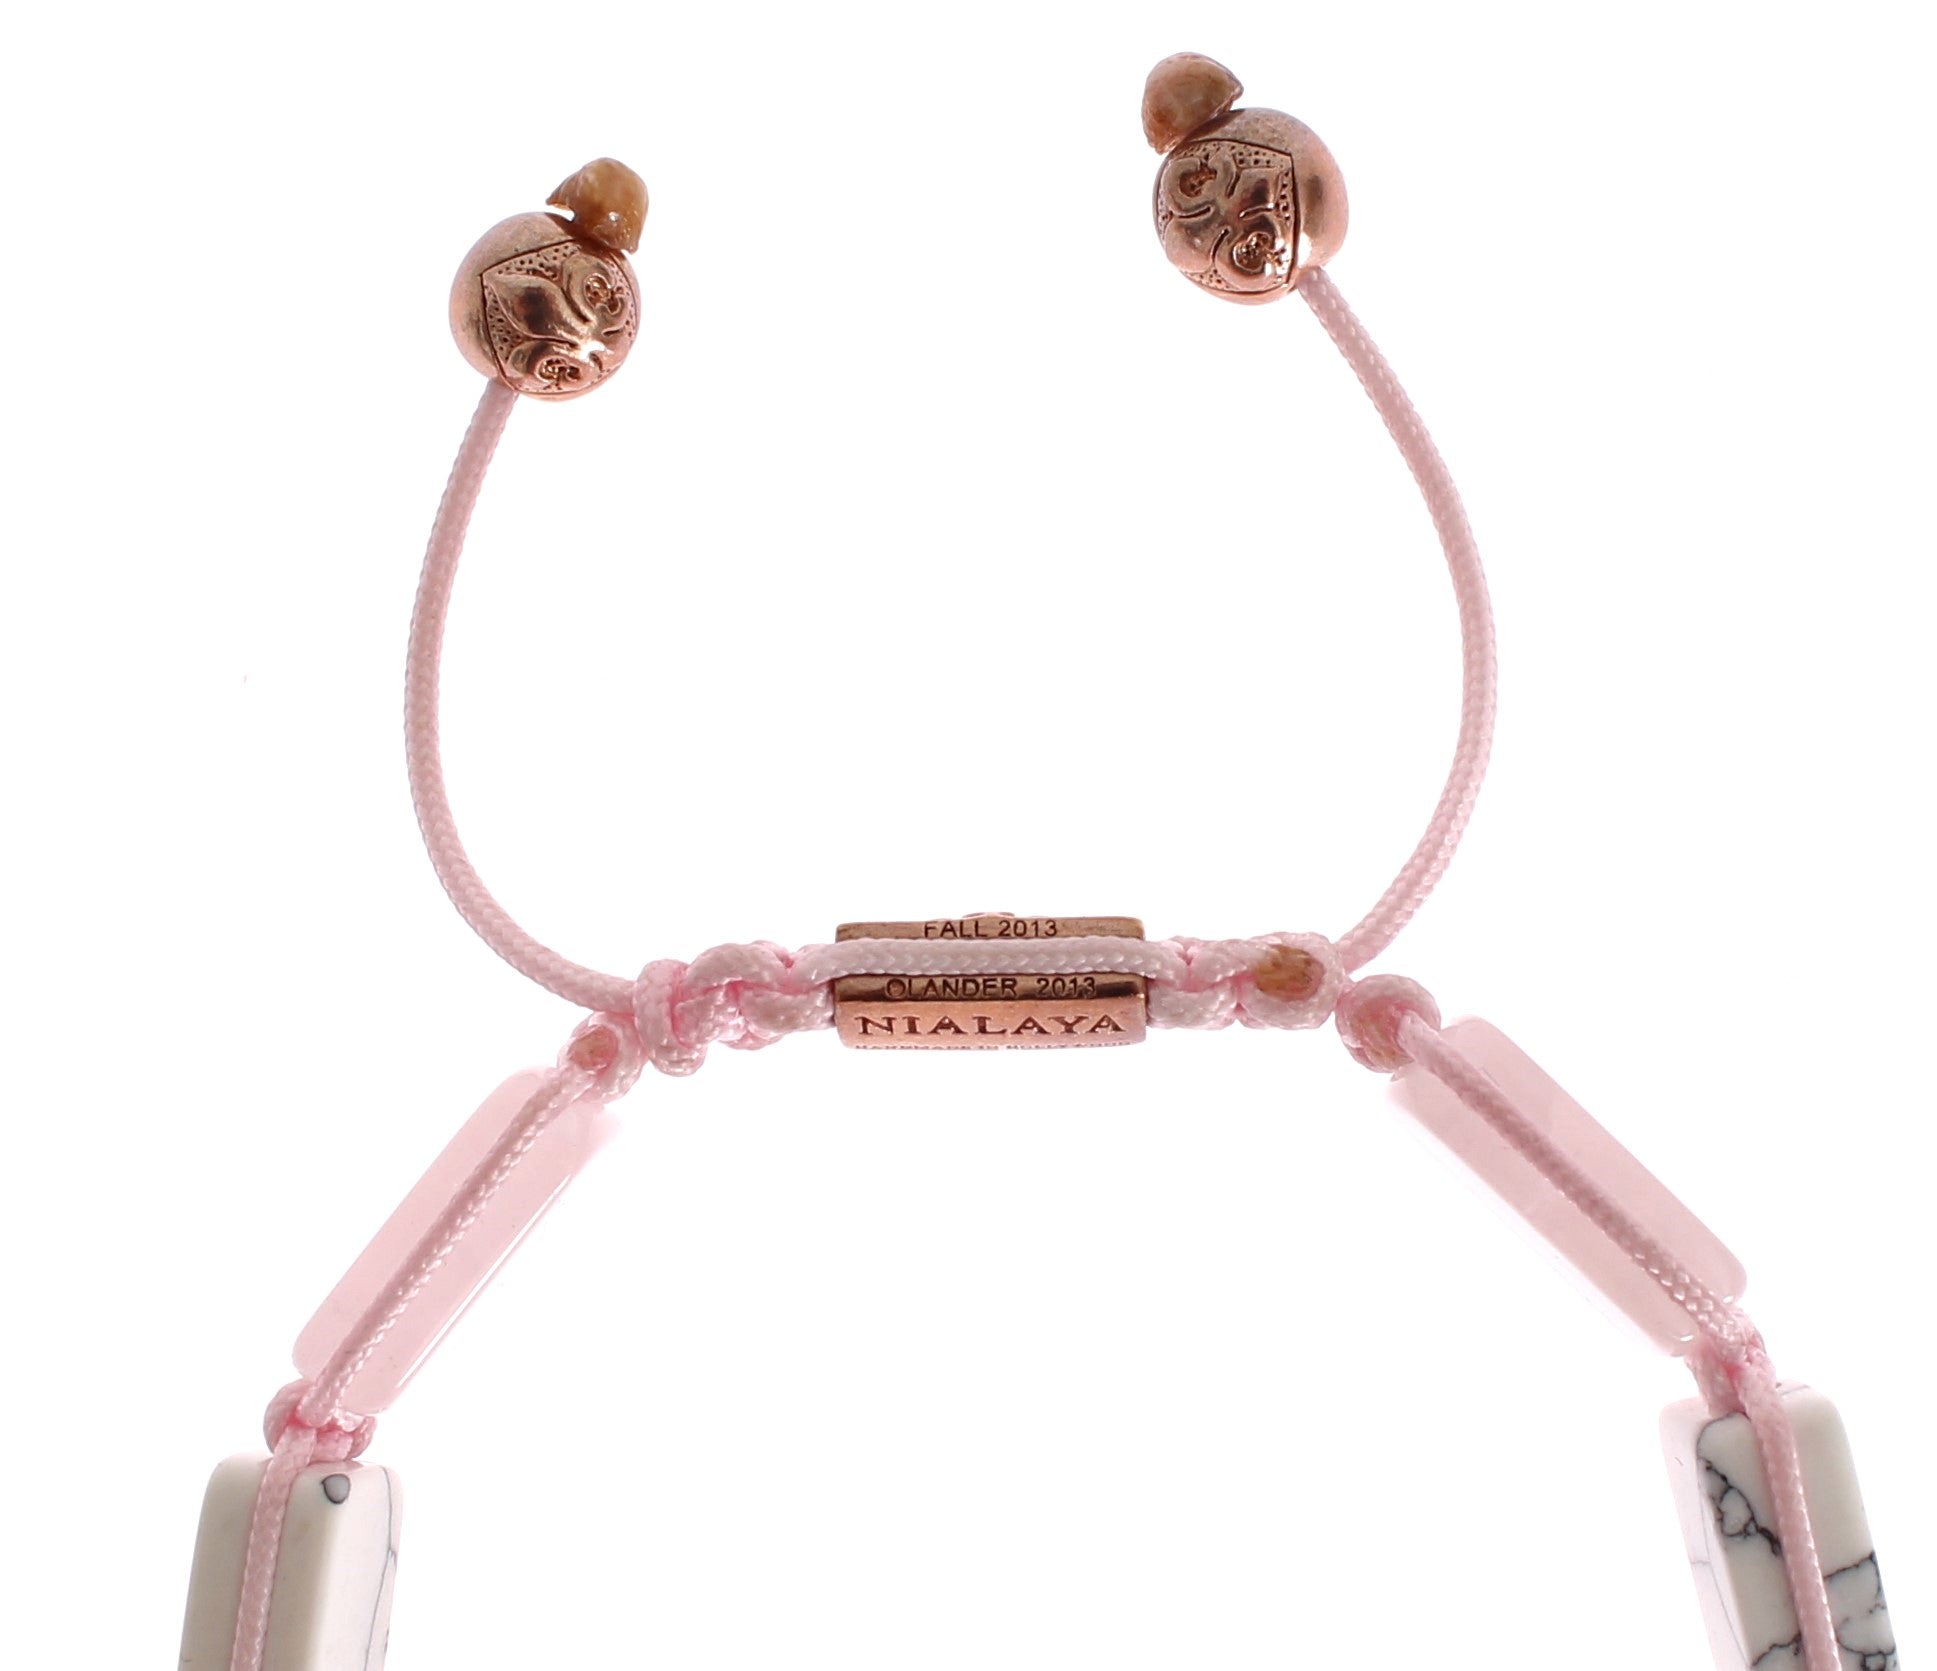 Nialaya Elegant Pink Gemstone Bracelet with Diamond Details